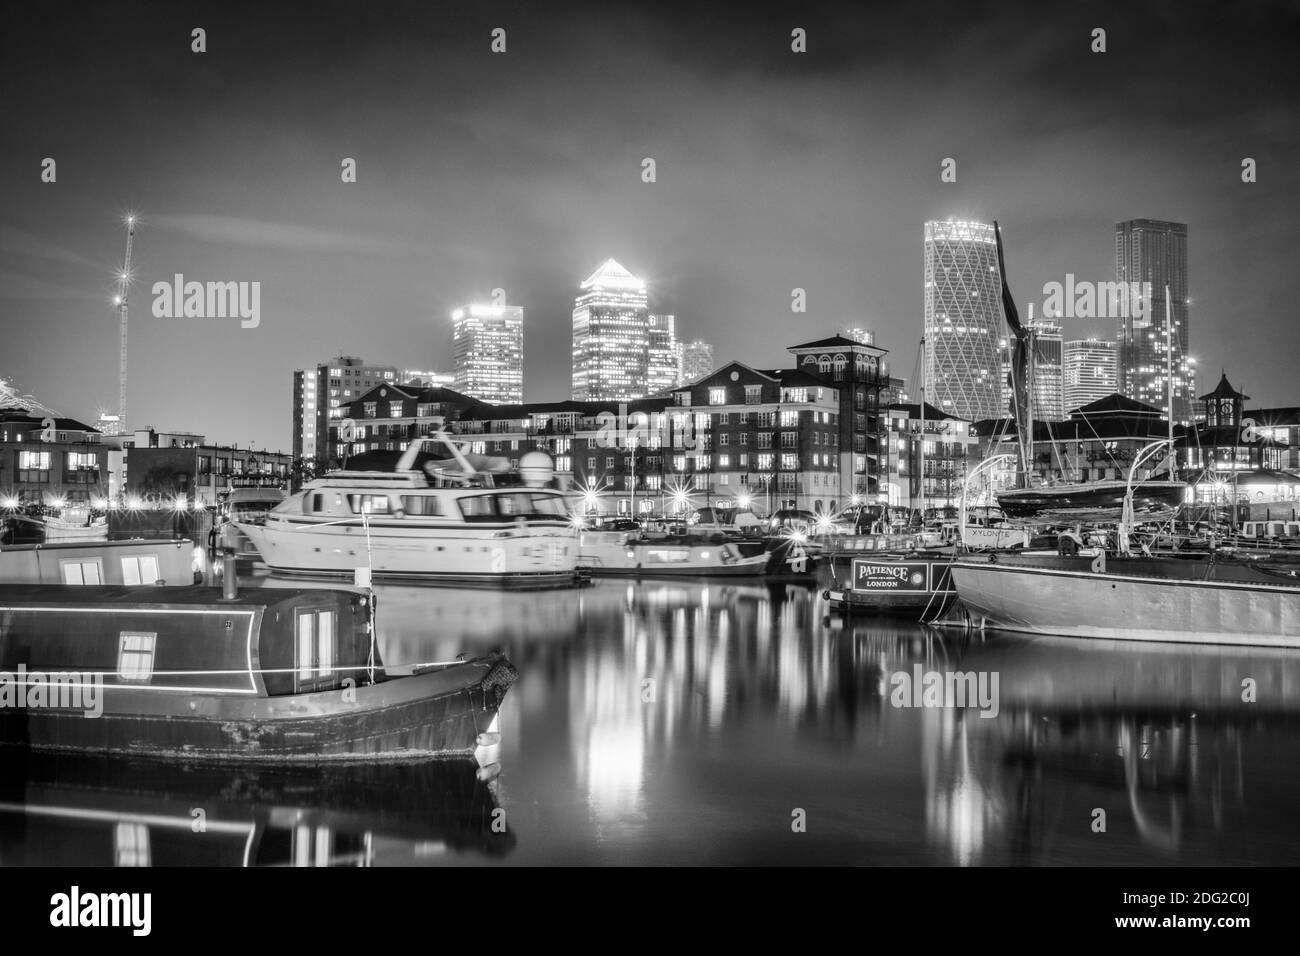 London, Tower Hamlets, Limehouse, Limehouse Basin waterside & marina, houseboats, illuminated skyline of the docklands financial district, night shot Stock Photo